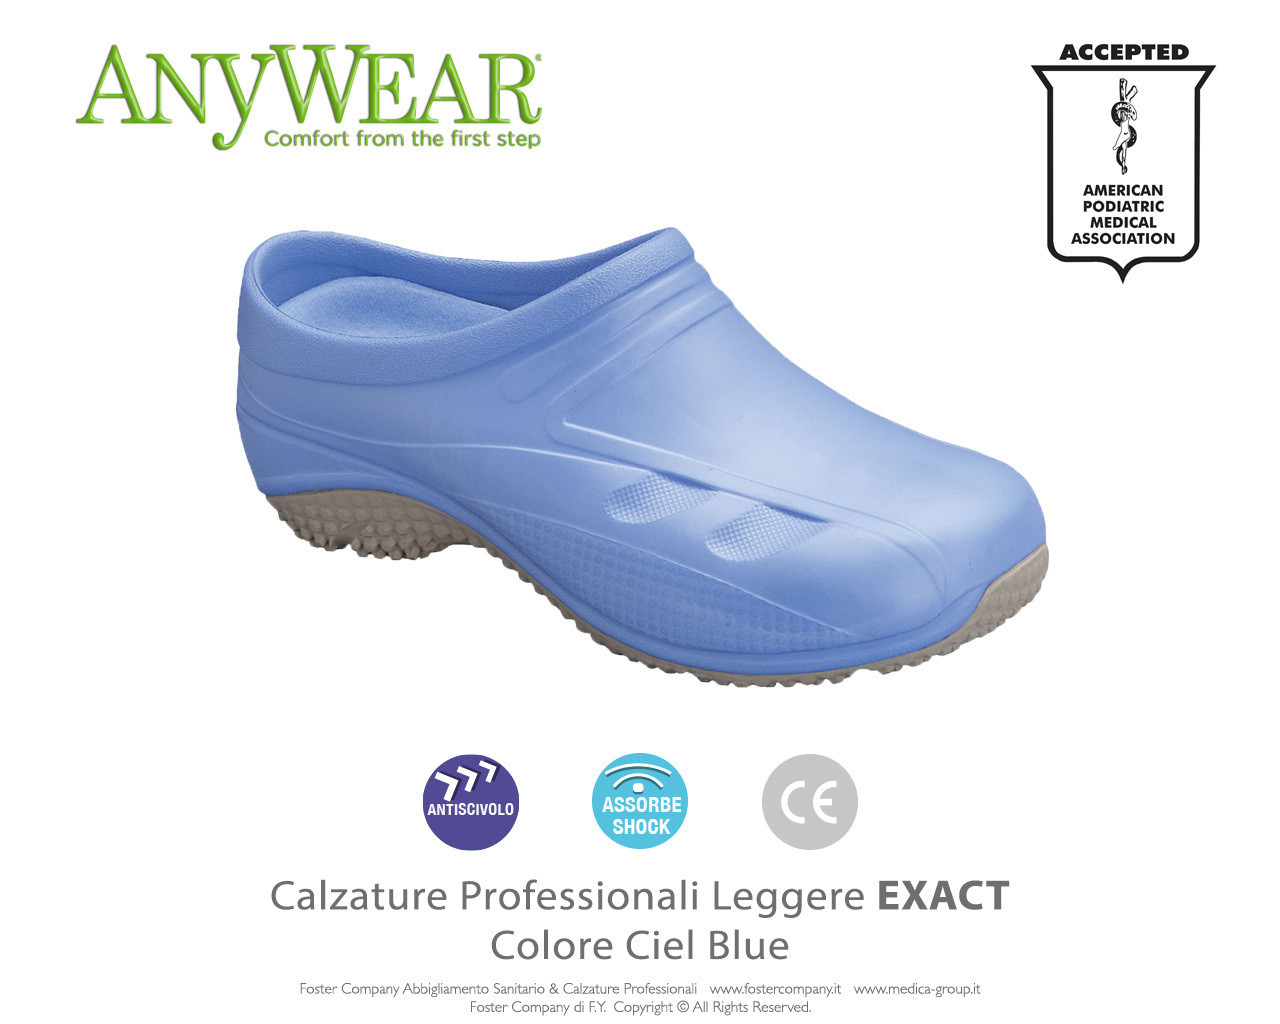 Calzature Professionali Anywear EXACT Colore Ciel Blue - FINE SERIE